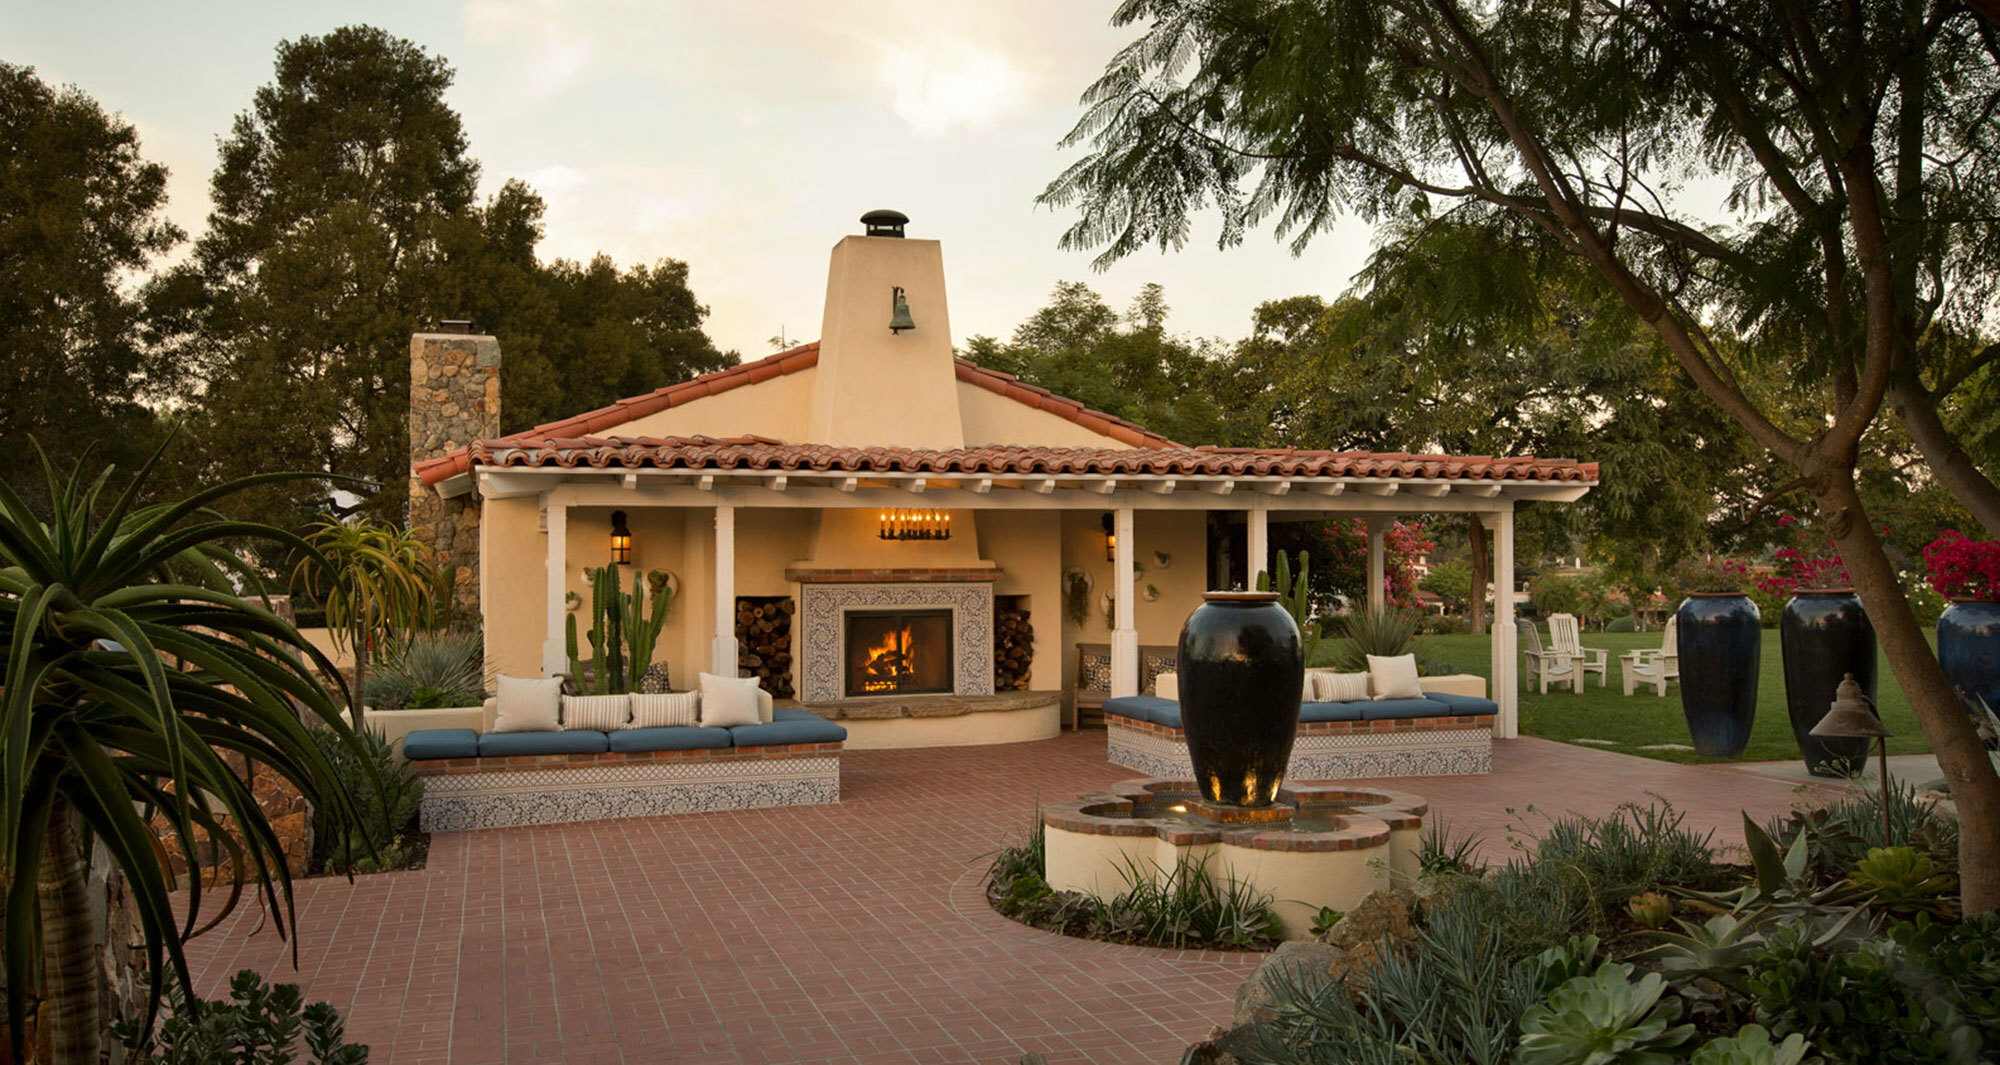 Photo of The Inn at Rancho Santa Fe, Rancho Santa Fe, CA